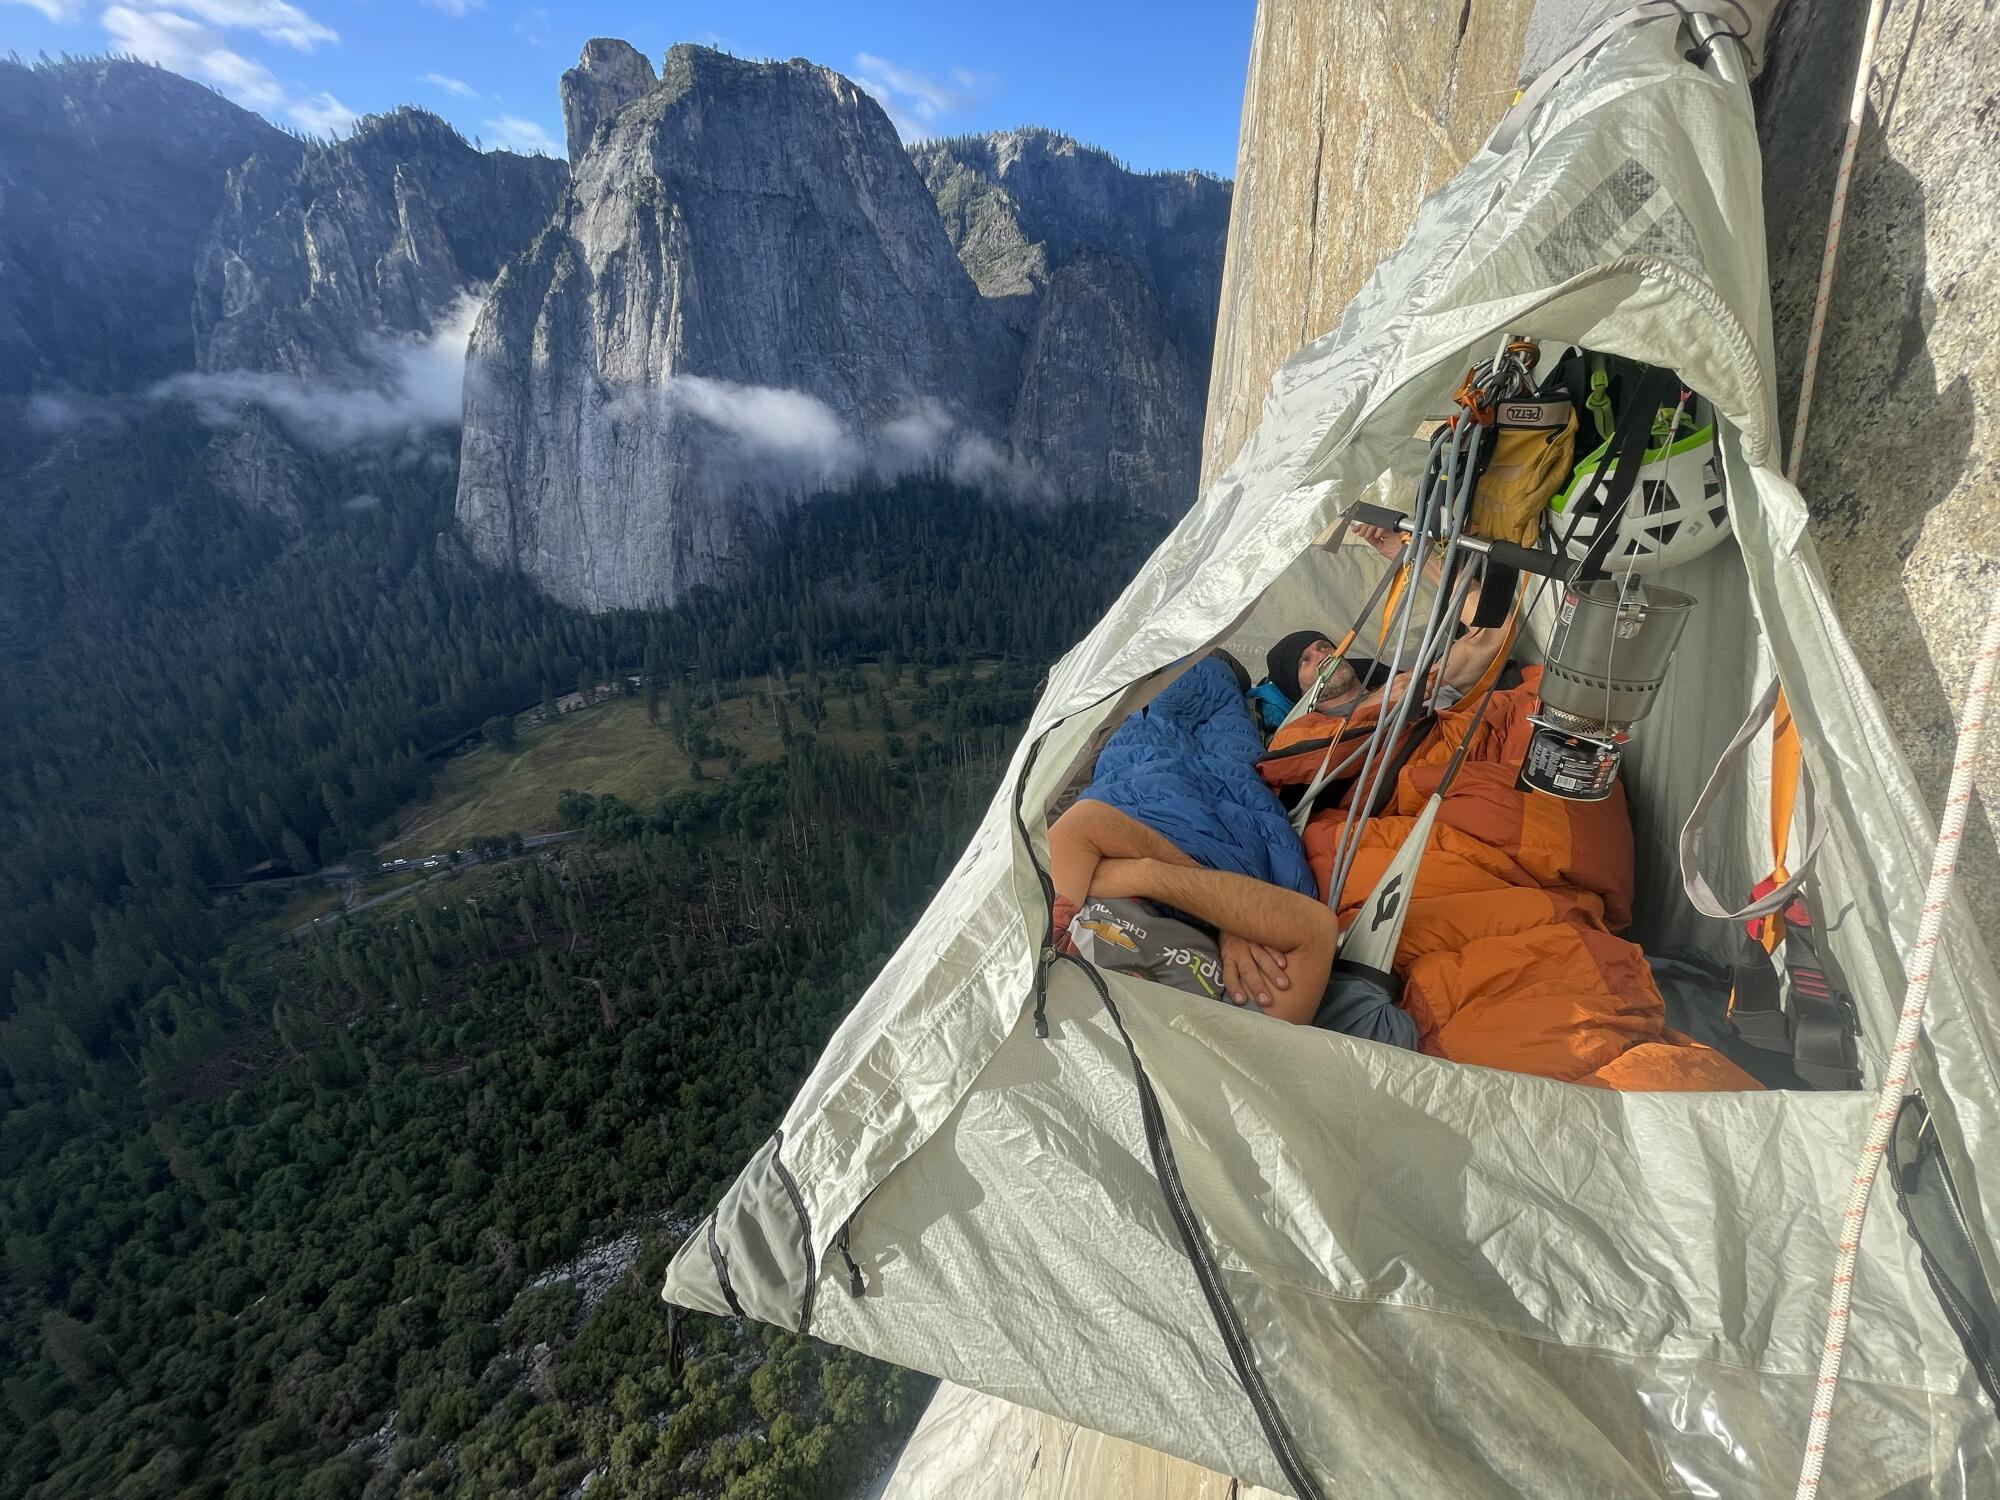 Zuko Carrasco and a climbing partner sleep on a tented platform anchored to El Capitan. 